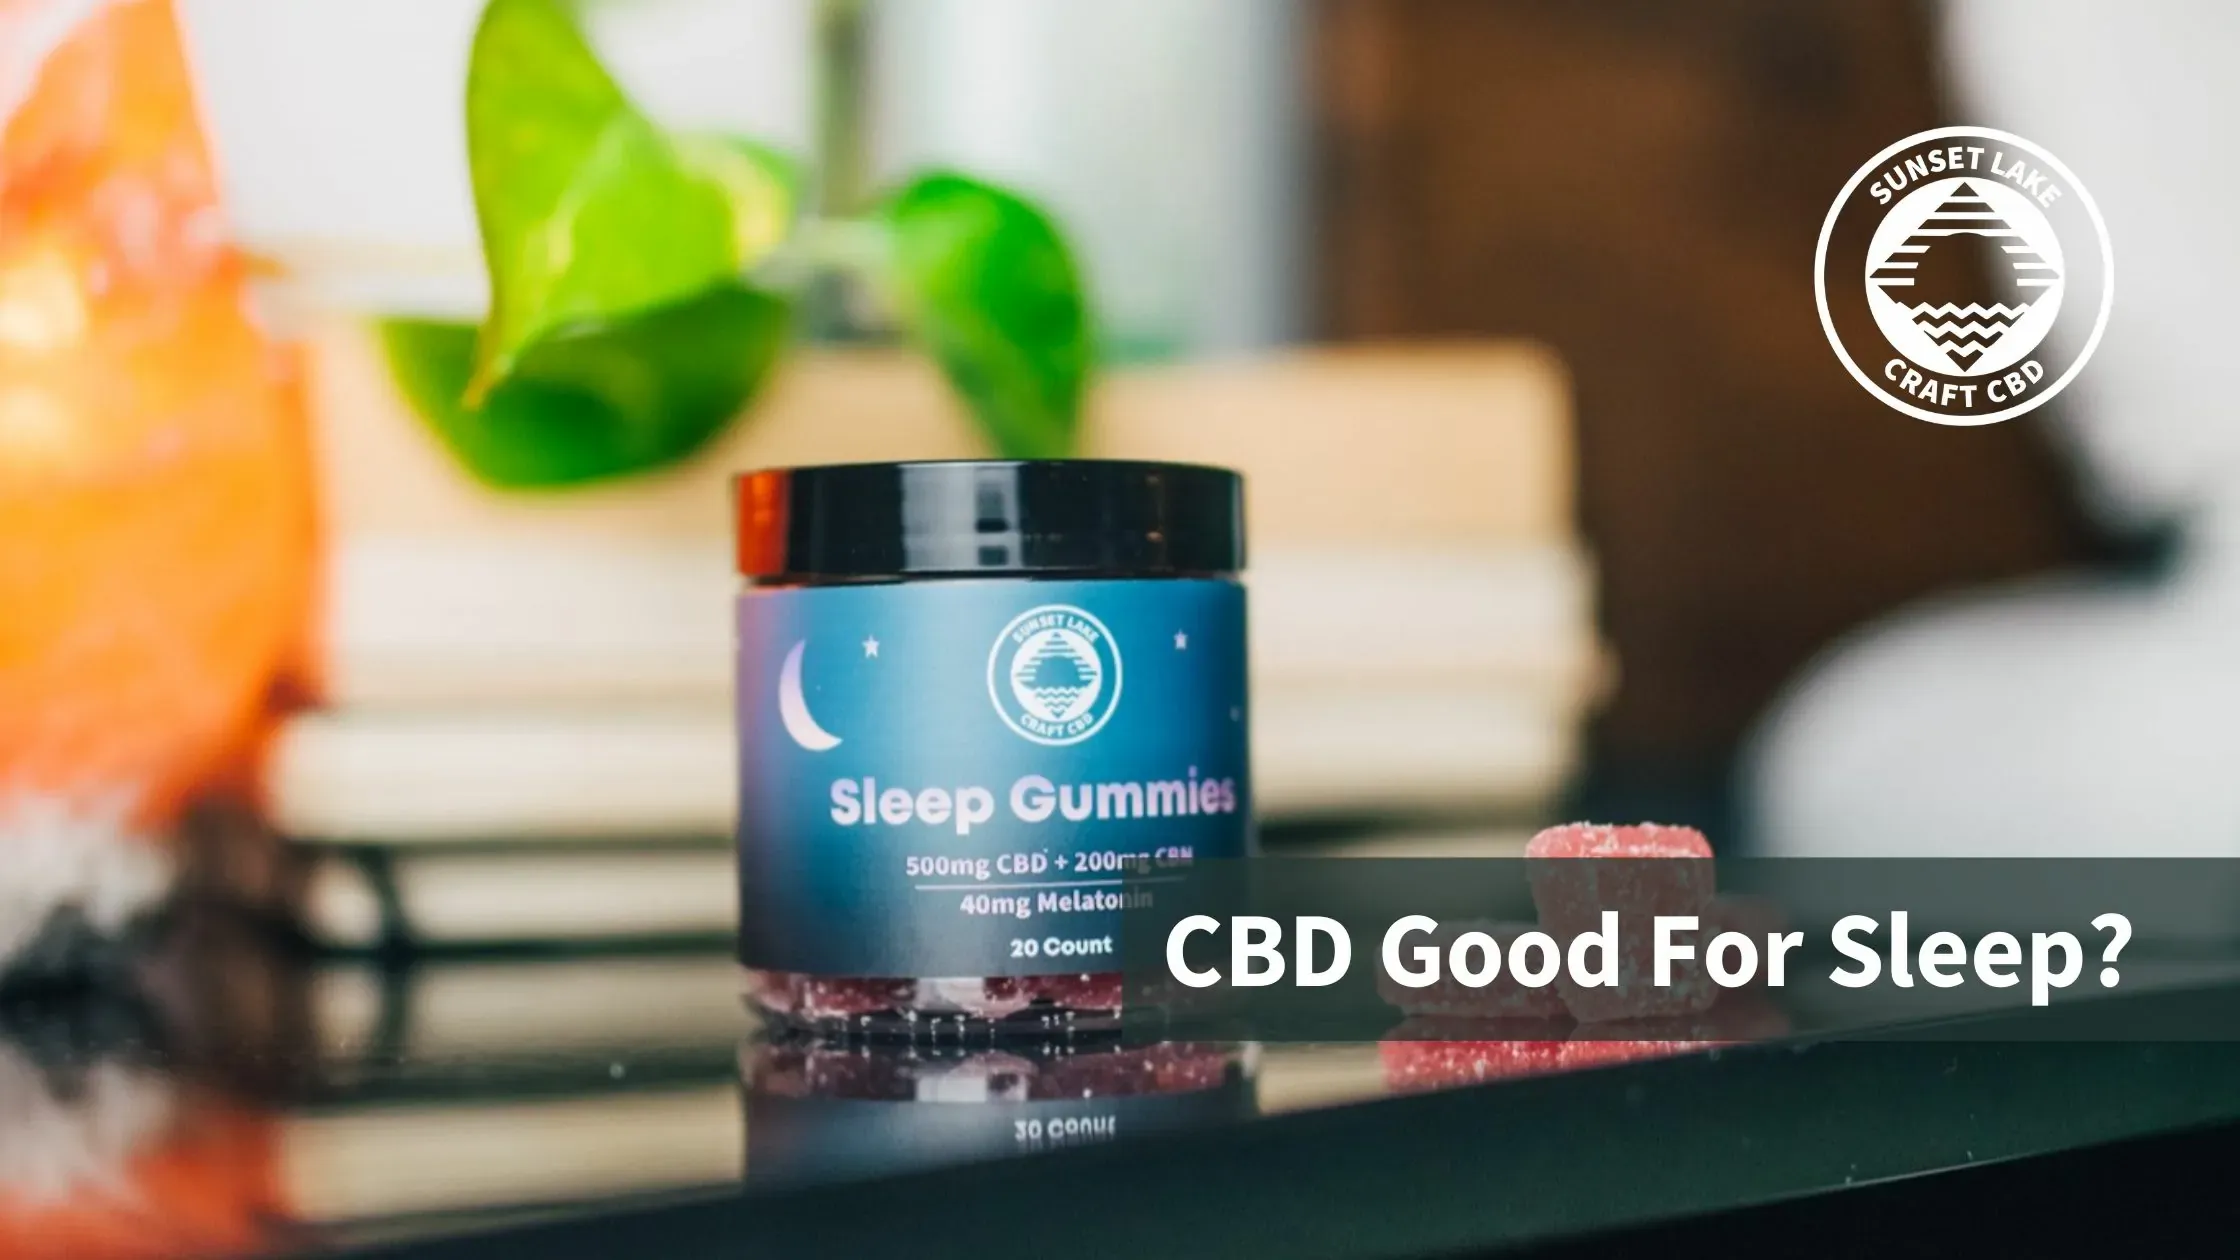 A jar of CBD Sleep Gummies on a nightstand with the text "CBD Good For Sleep?"